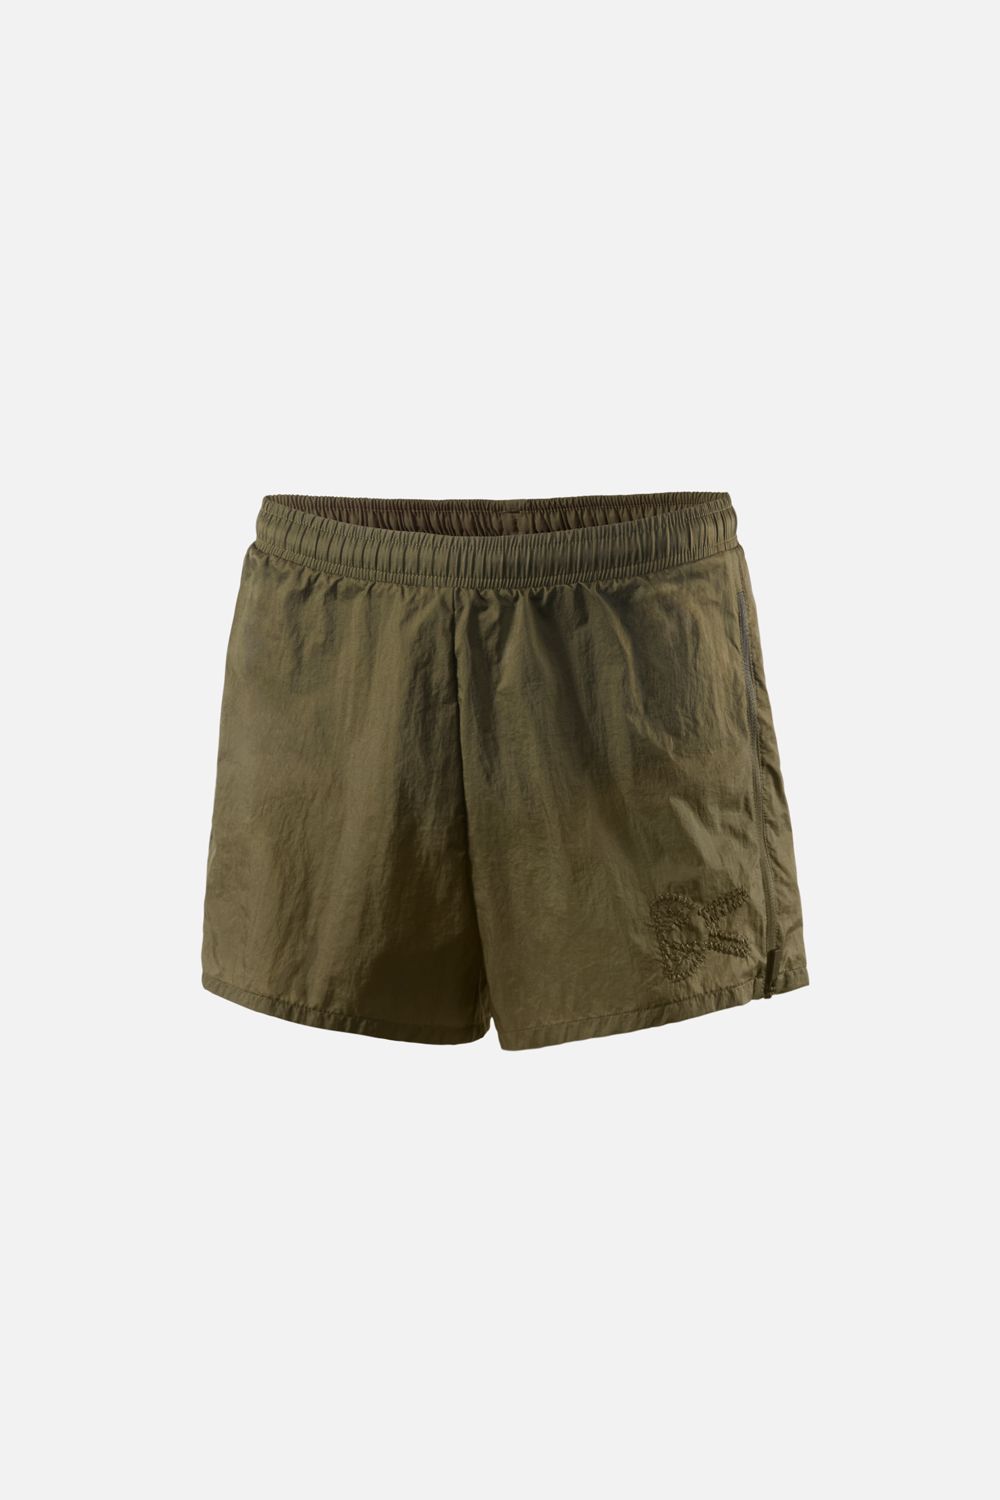 Ultralight Zippered Hiking Shorts, Olive